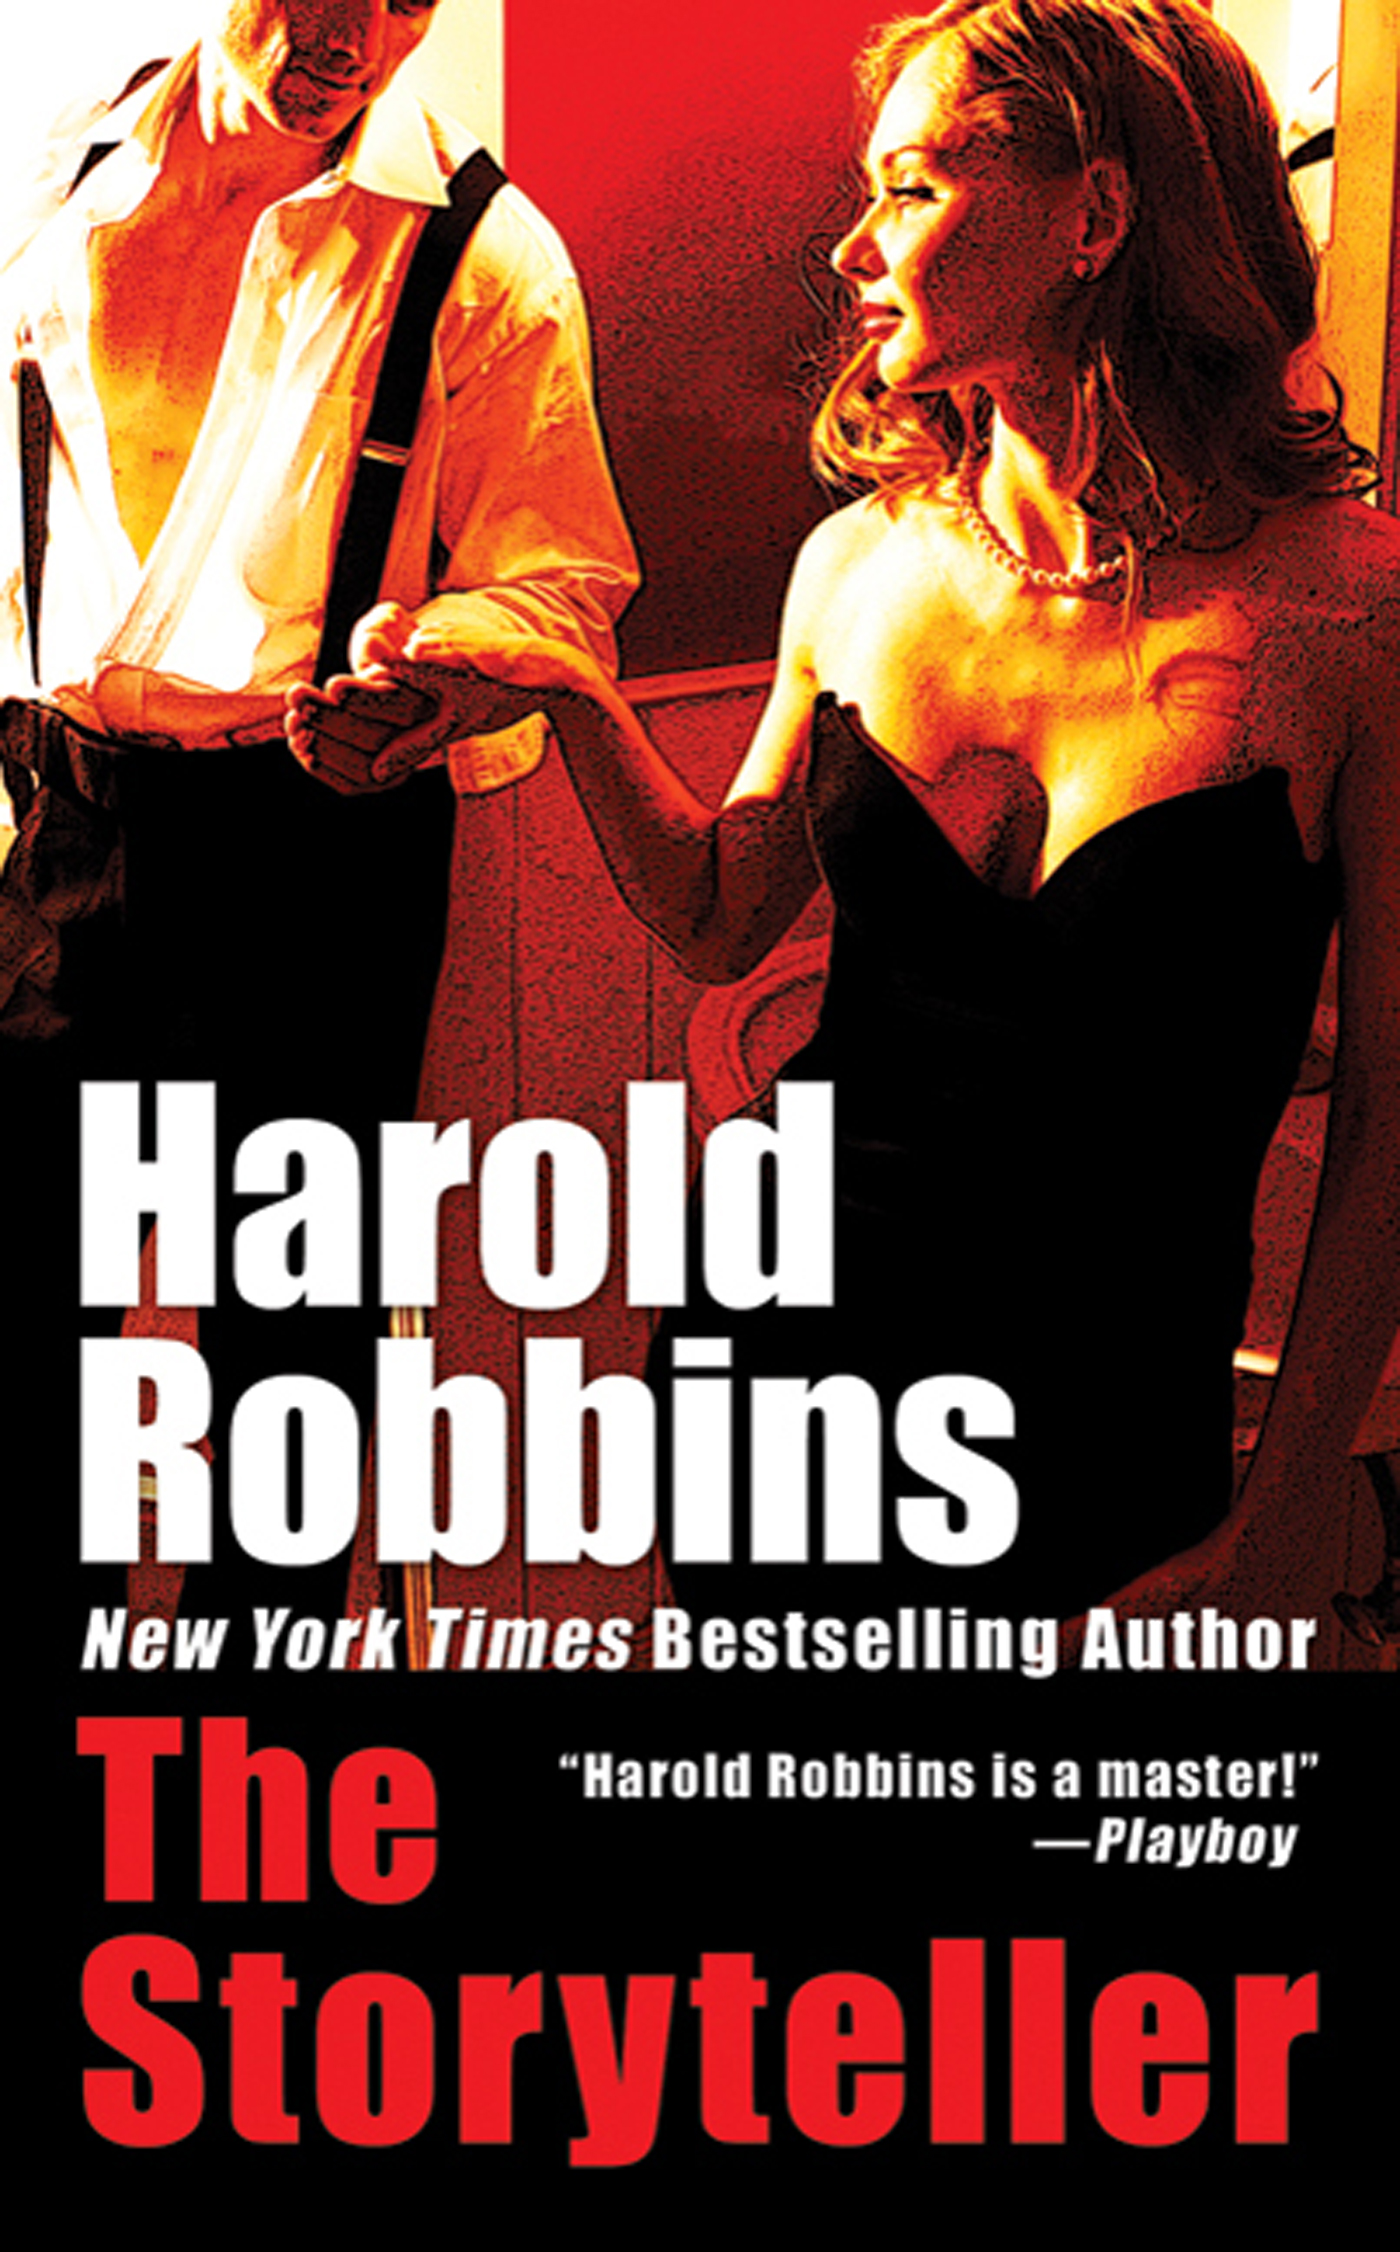 The Storyteller by Harold Robbins